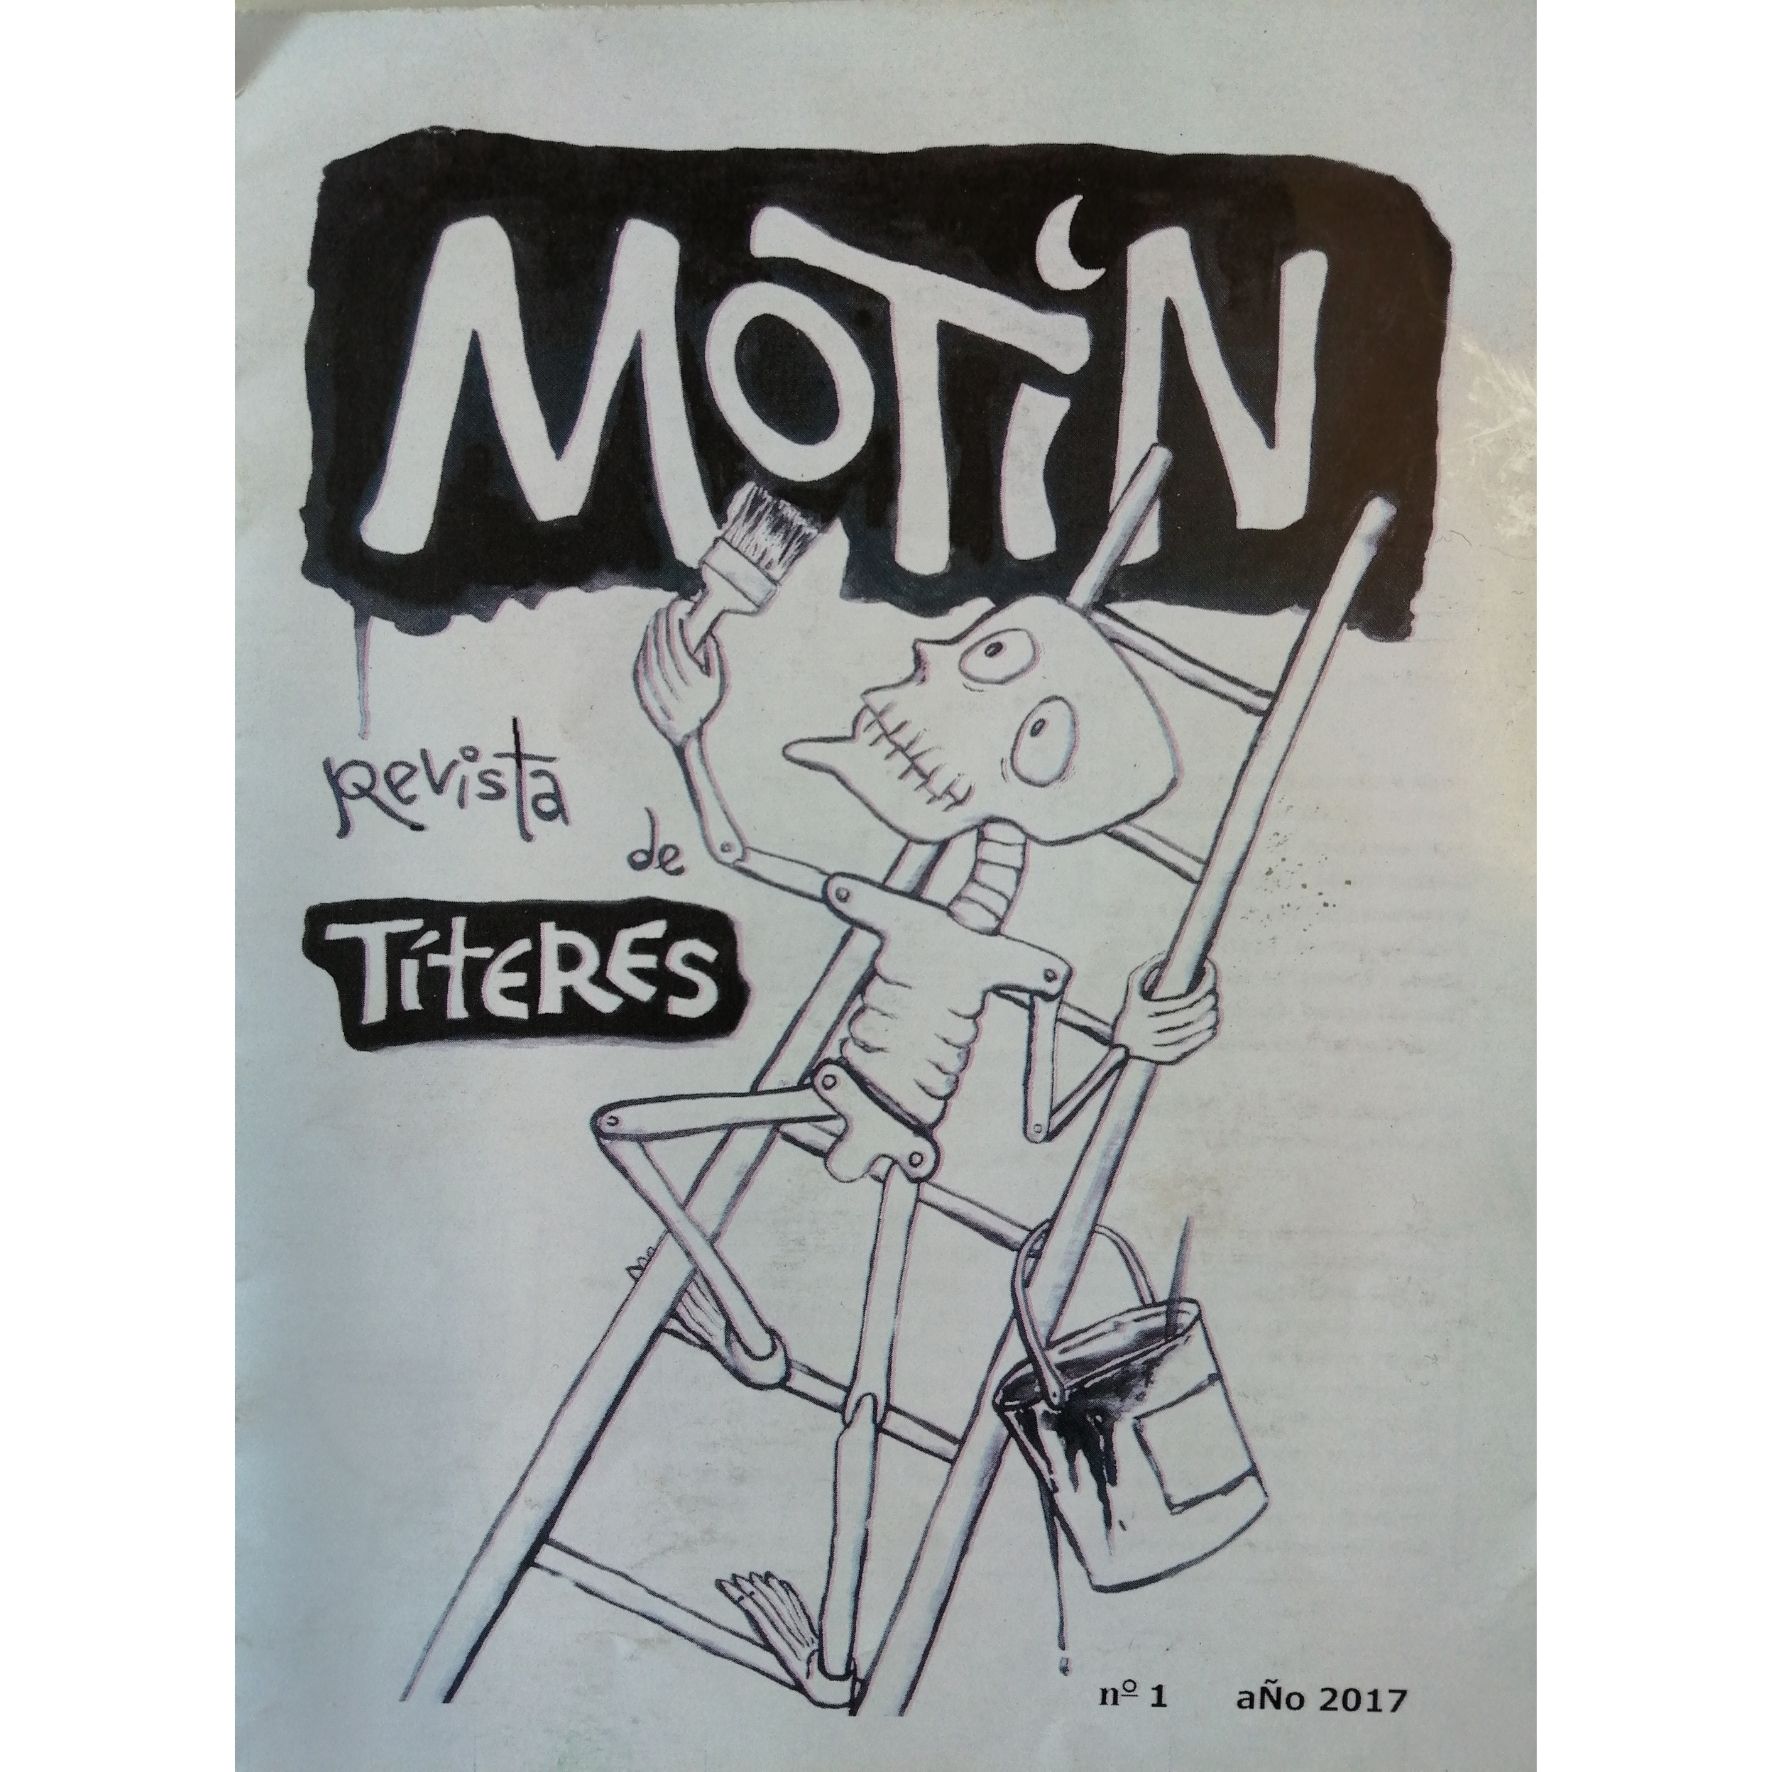 Motín. Revista de Títeres nº 1, 2017